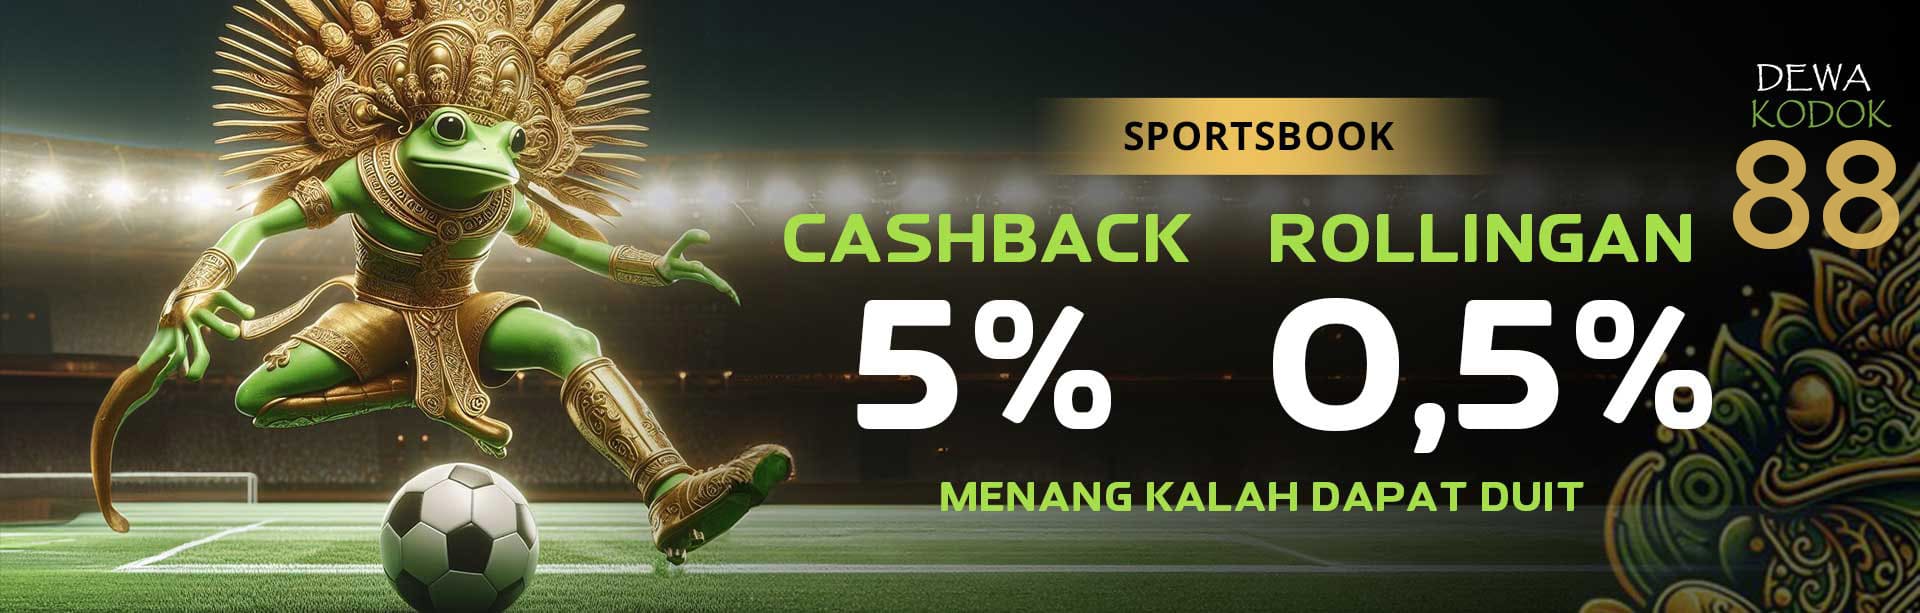 DEWAKODOK Bonus Member Sportbook Cashback 5% Rollingan 0.5%